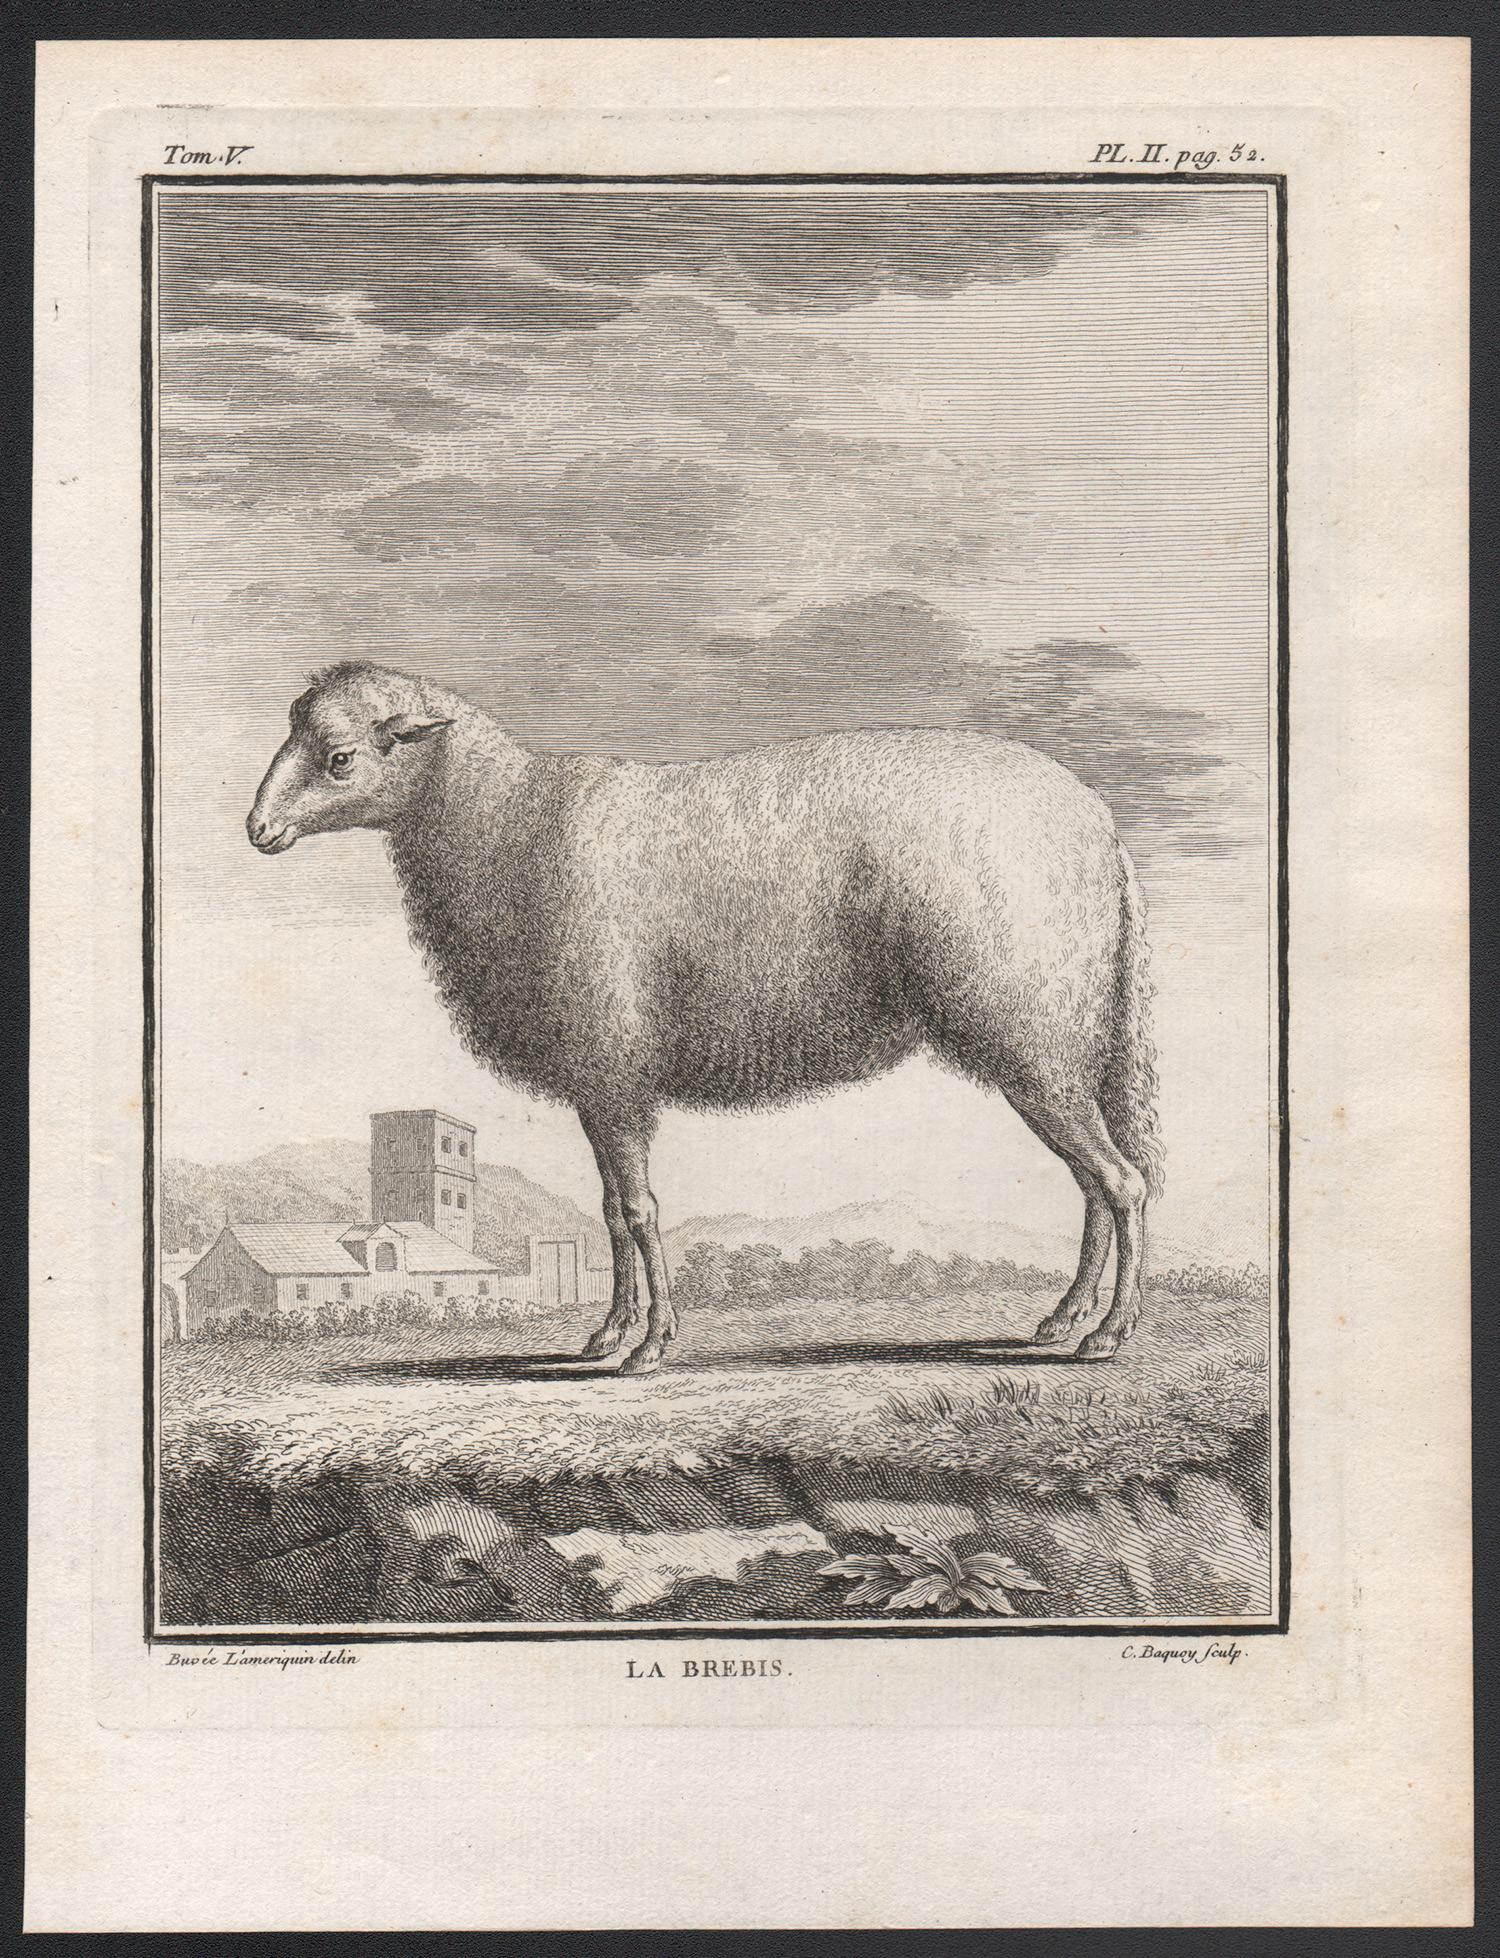 La Brebis, antique French 1760s sheep engraving - Print by Buvee Lameriquin